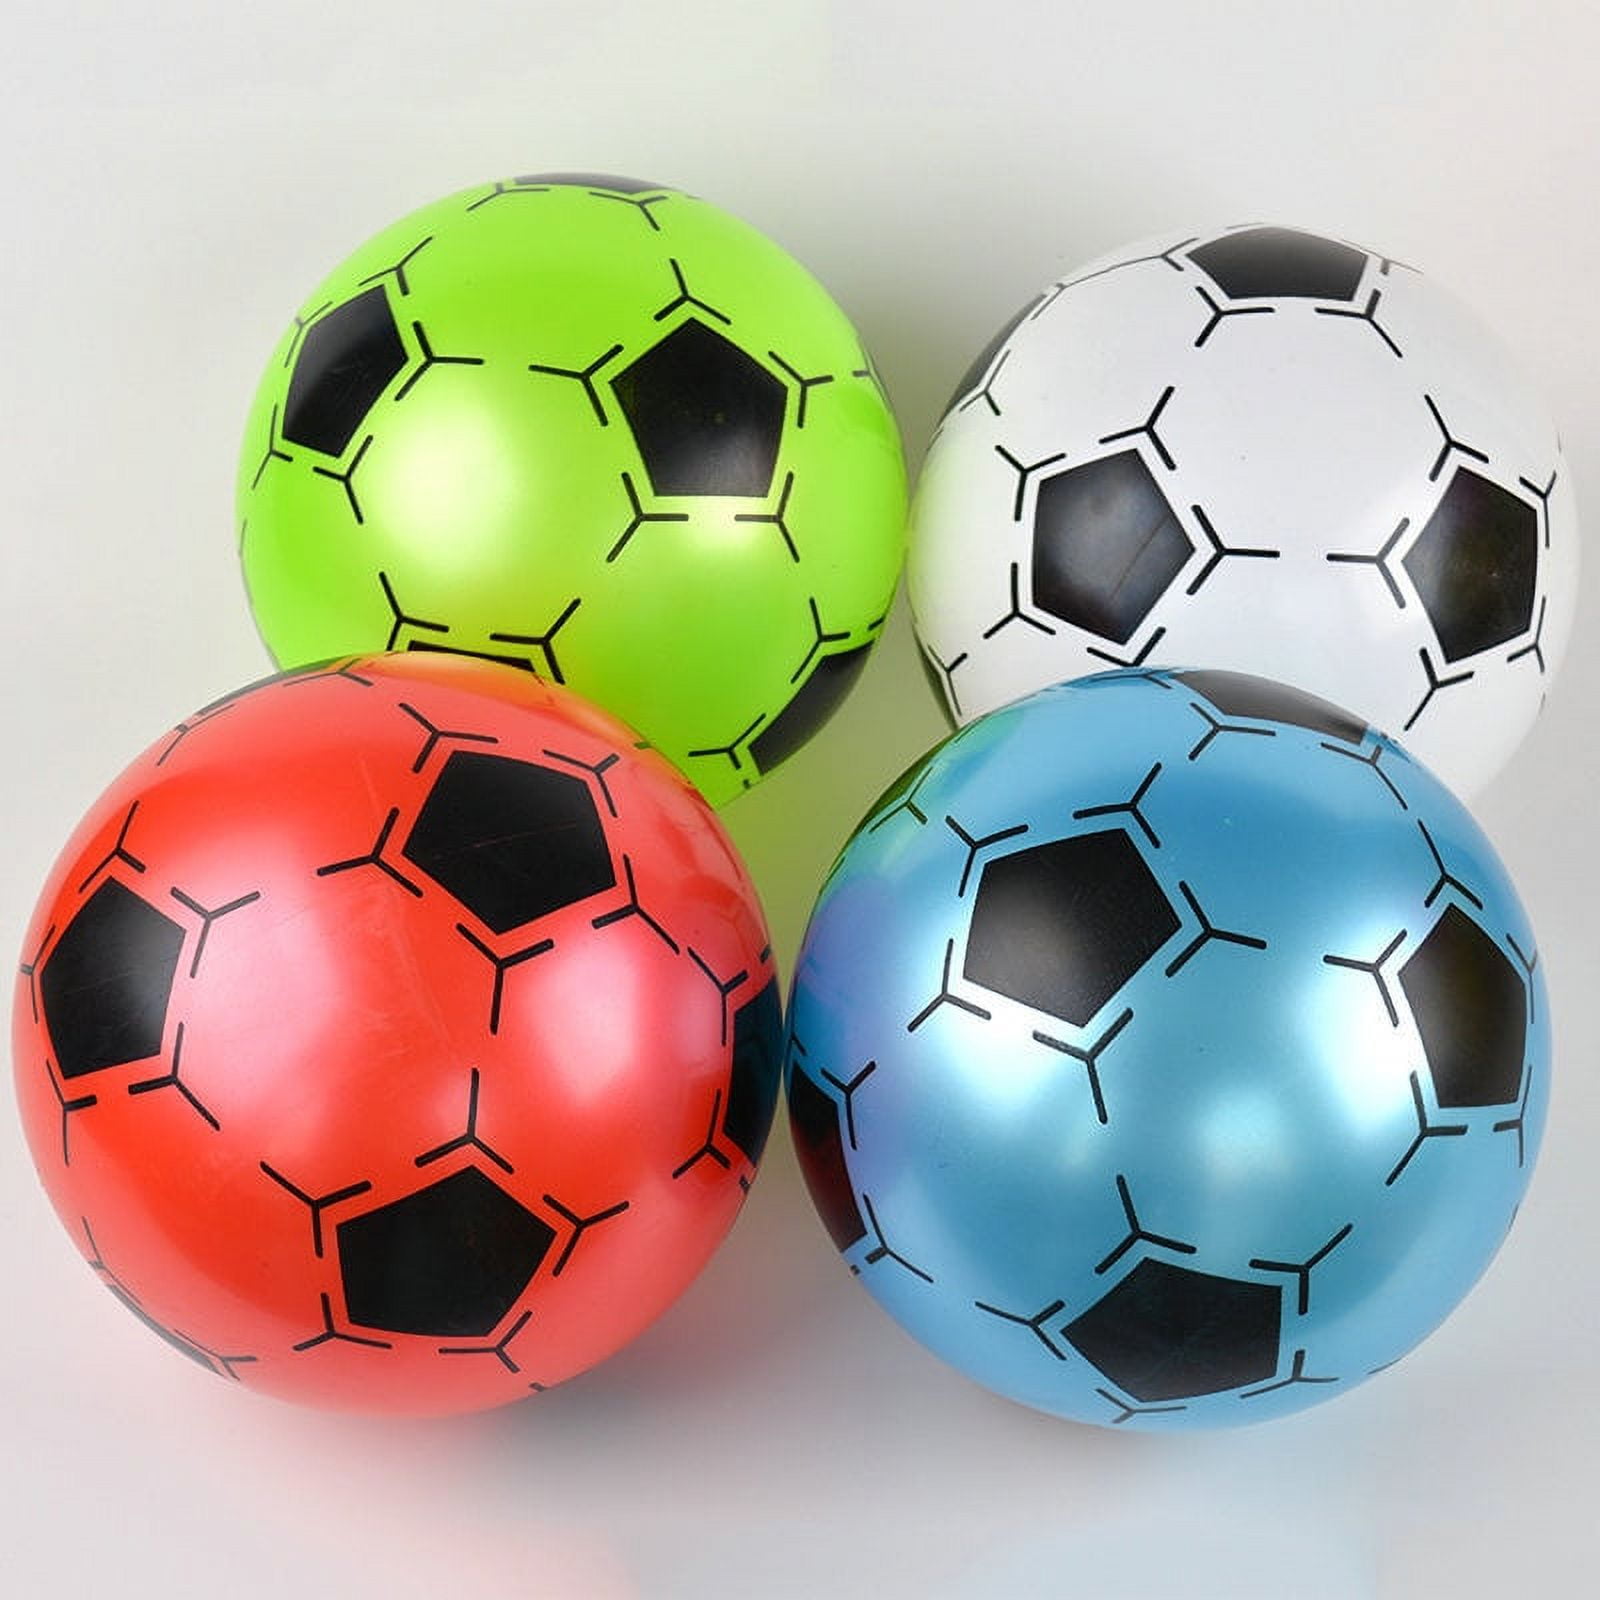 9 Football PVC Ball Kids Outdoor Toy Garden Game - Pocket Money Toy